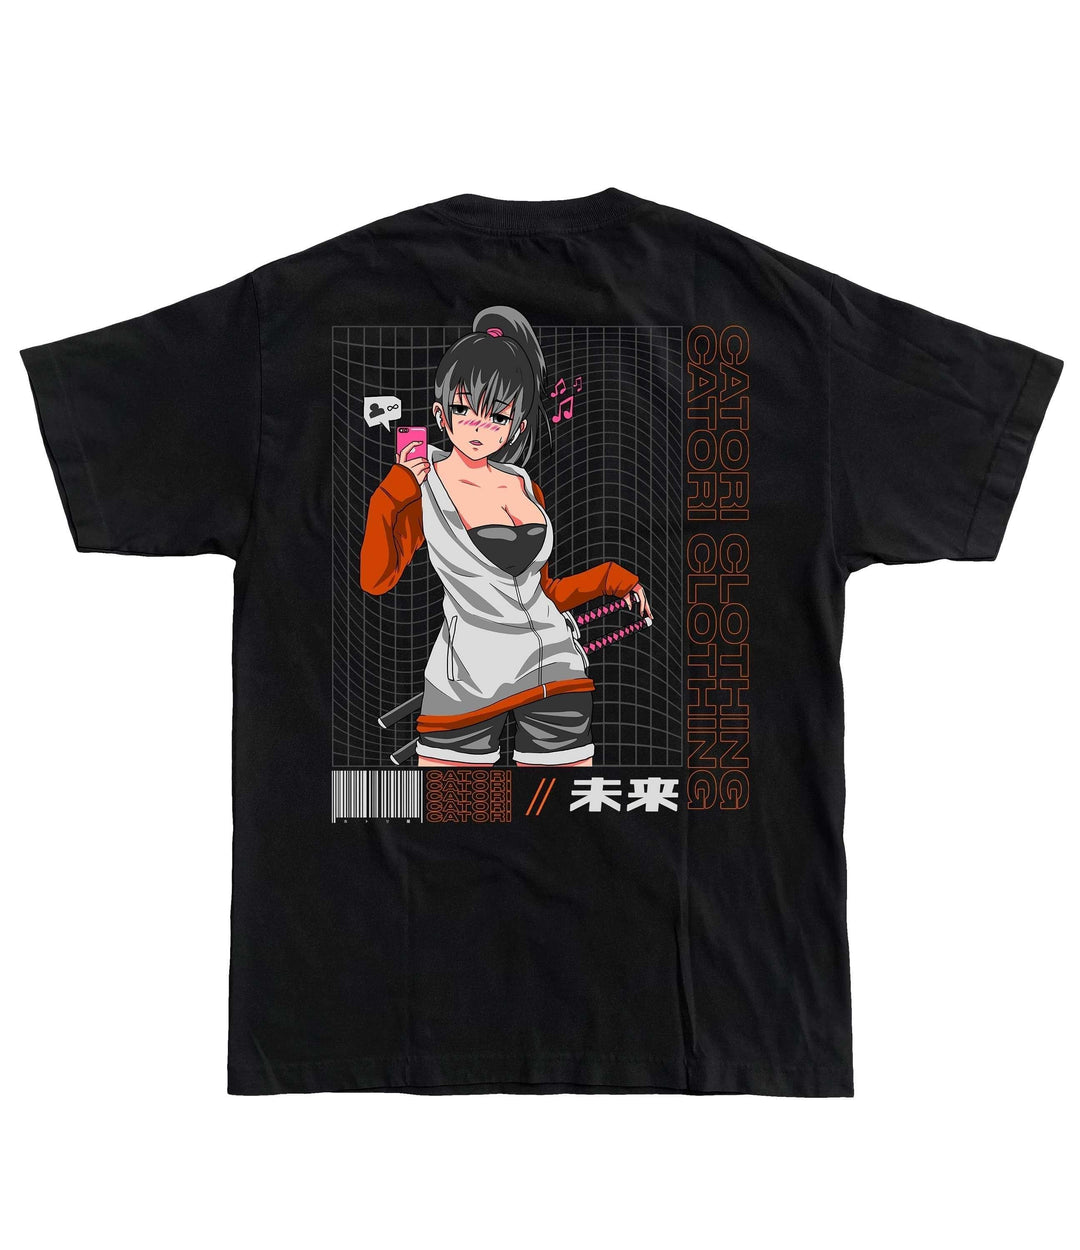 Future T-Shirt at Catori Clothing | Graphic & Anime Tees, Hoodies & Sweatshirts 